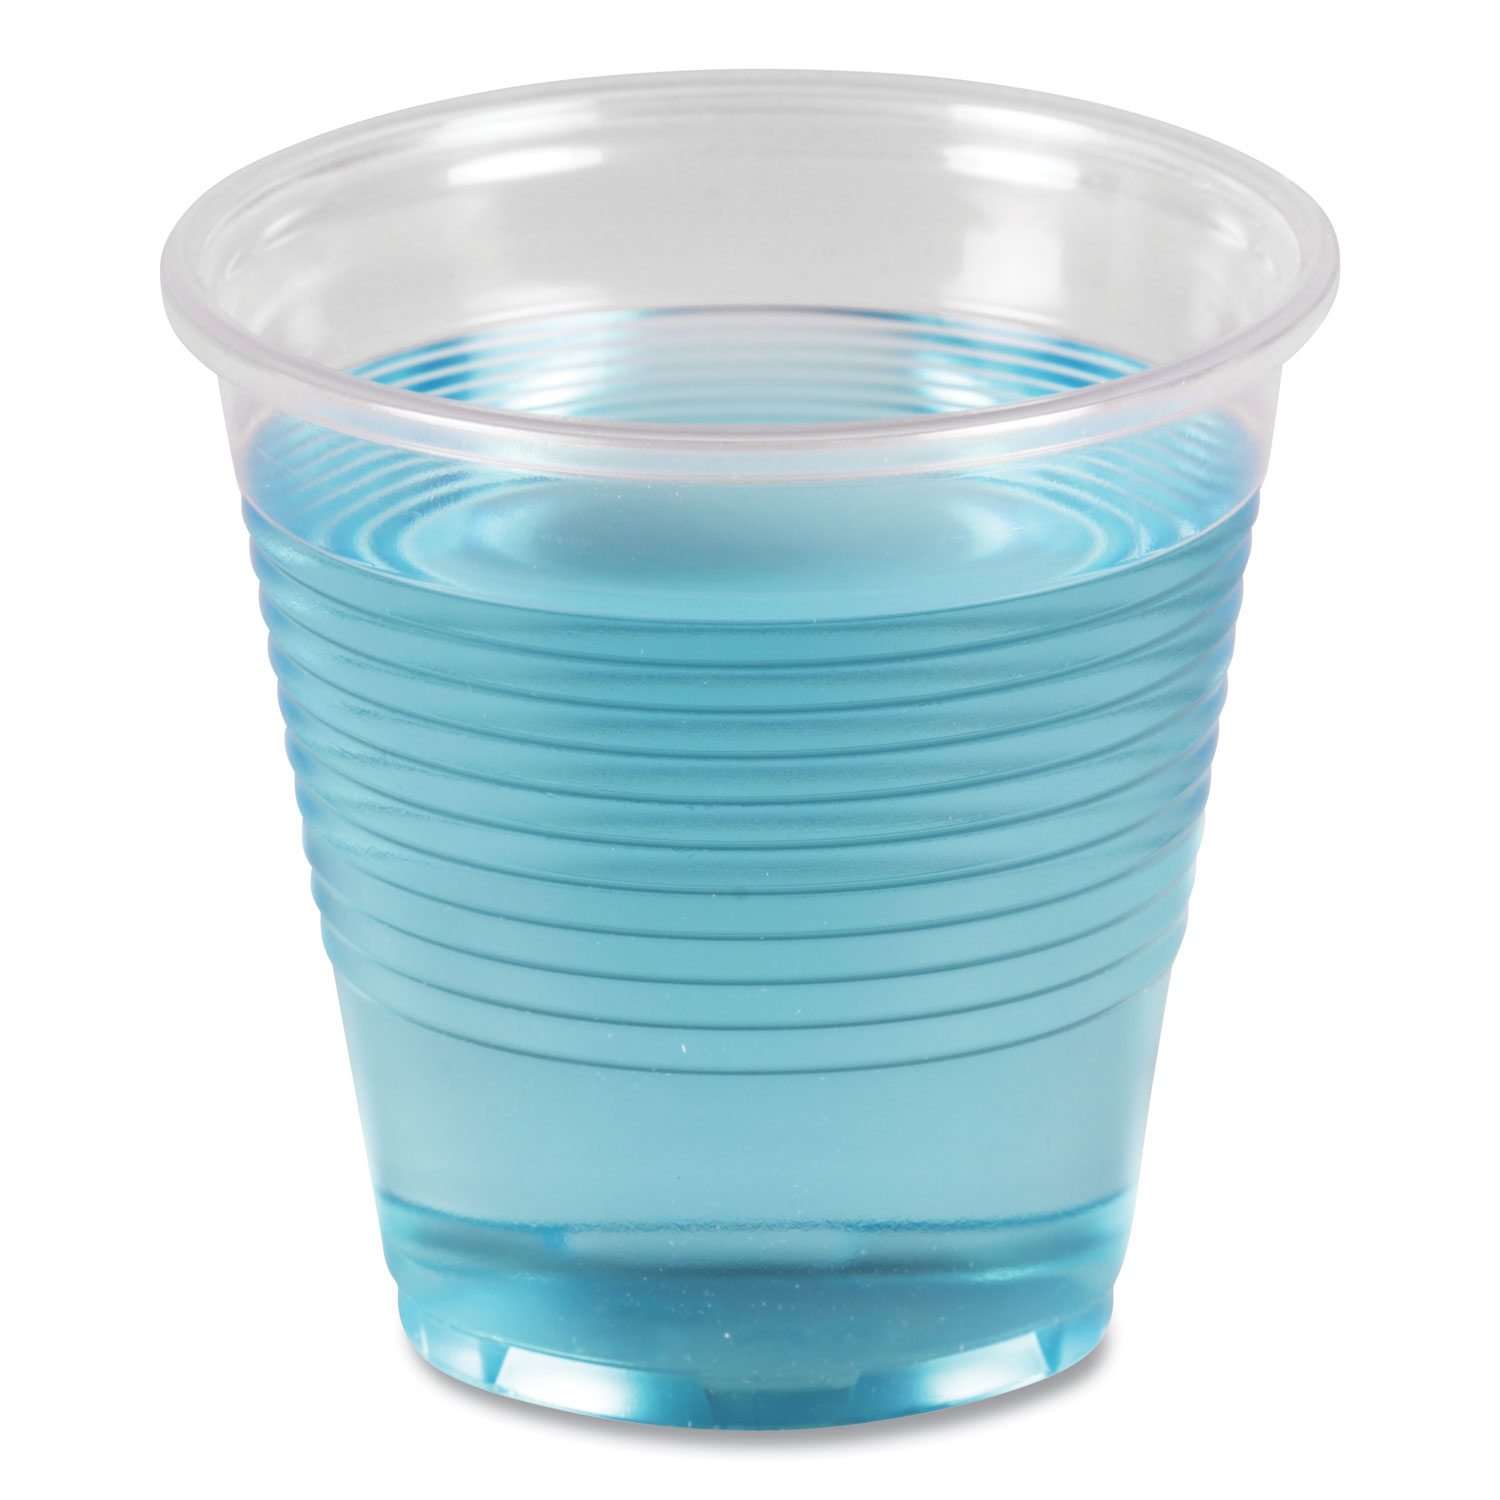 Ball Aluminum Cold Drink Cups 10 Pc 20 oz Reusable Refillable 100